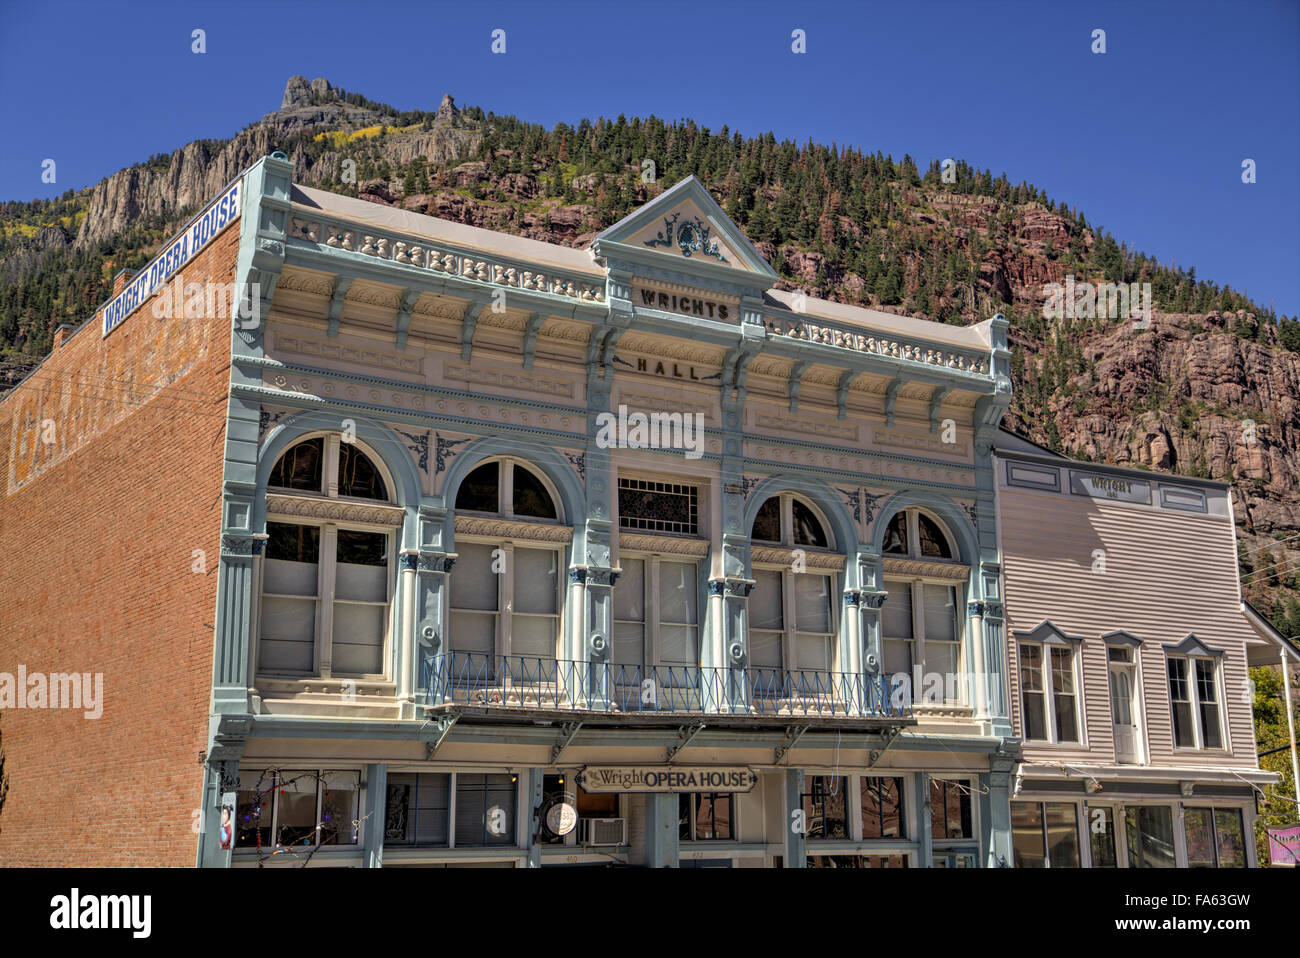 Wright Opera House, Ouray, Colorado, USA Banque D'Images